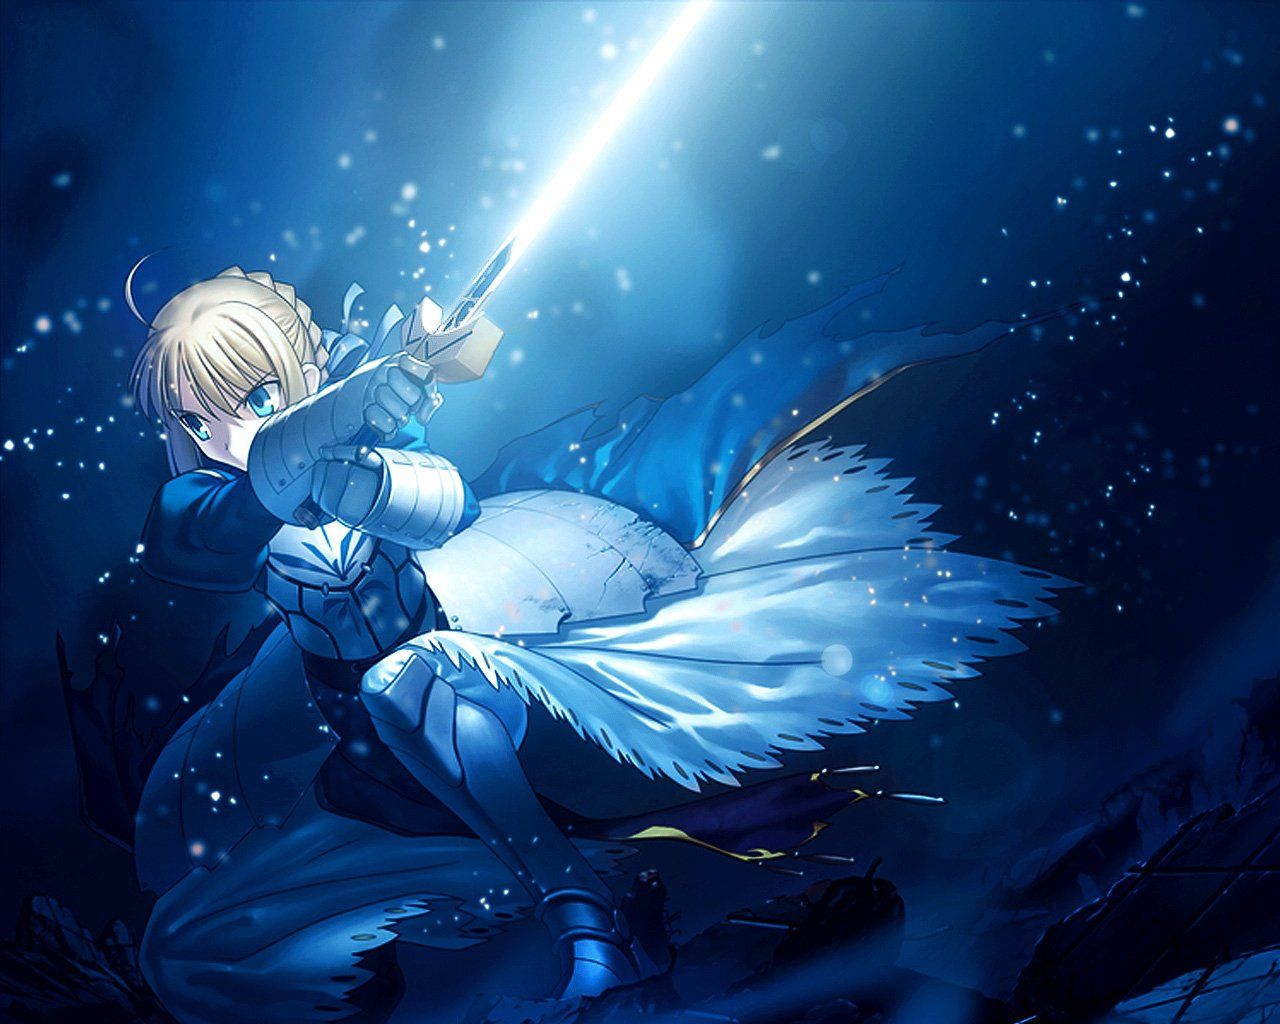 Anime Fate Stay Night Fate Series Saber (Fate Series) Excalibur Sword Artoria Pendragon Fate (Series) Weapon Blue E. Fate Stay Night Anime, Fate Stay Night, Anime